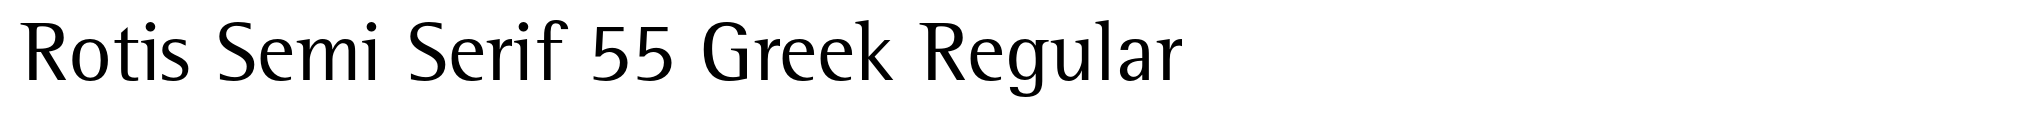 Rotis Semi Serif 55 Greek Regular image